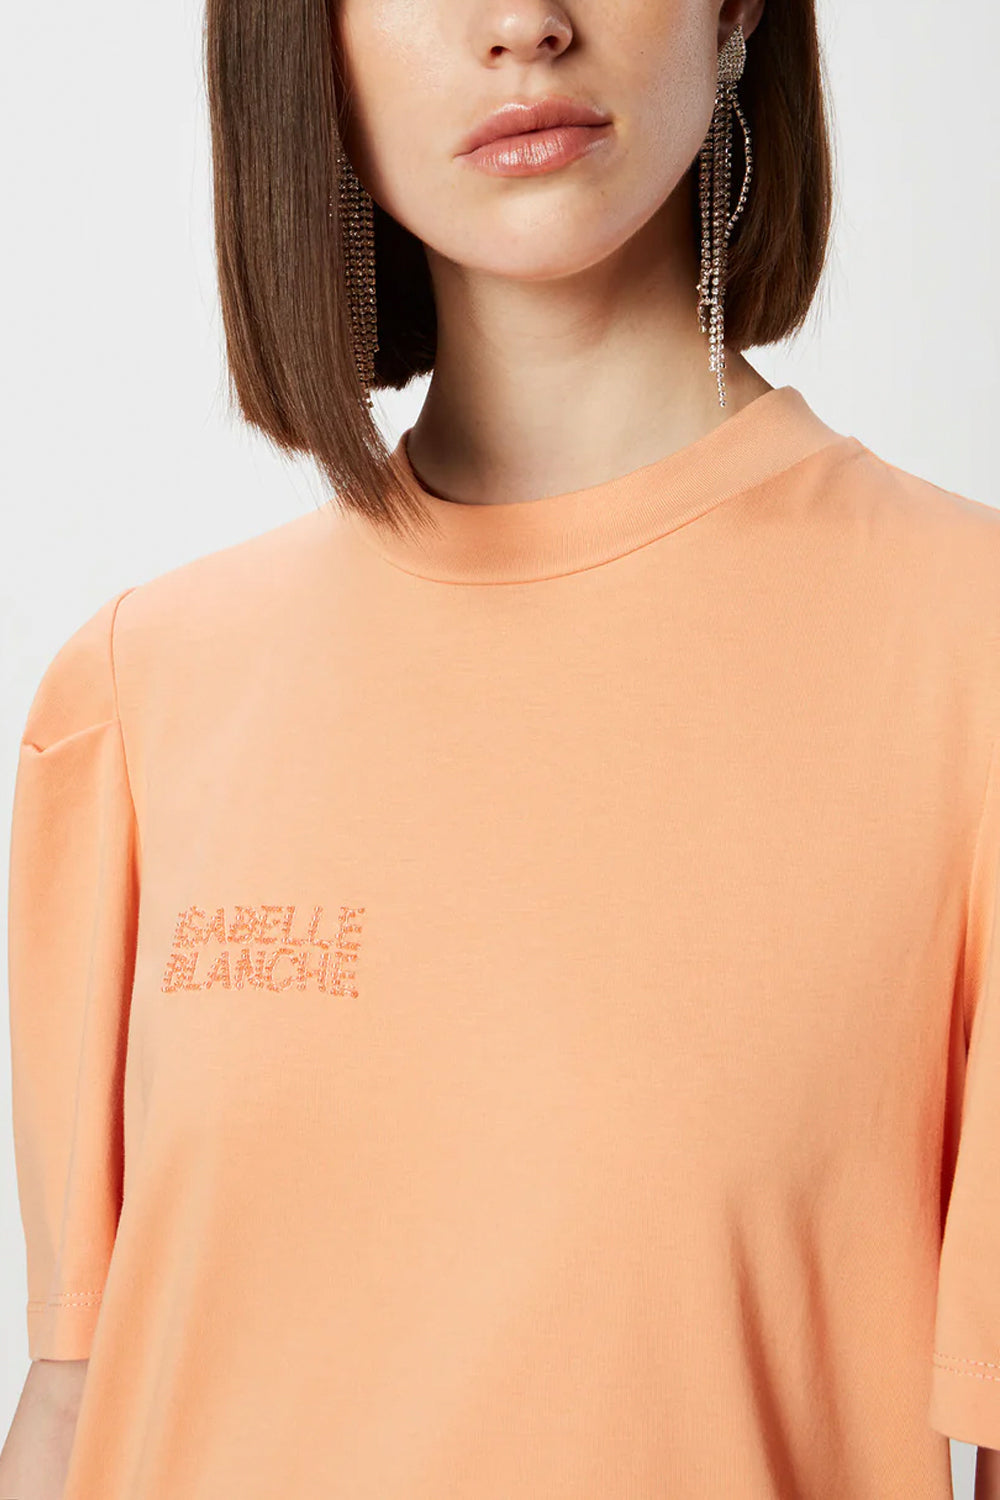 ISABELLE BLANCHE T-shirt con ricamo perline